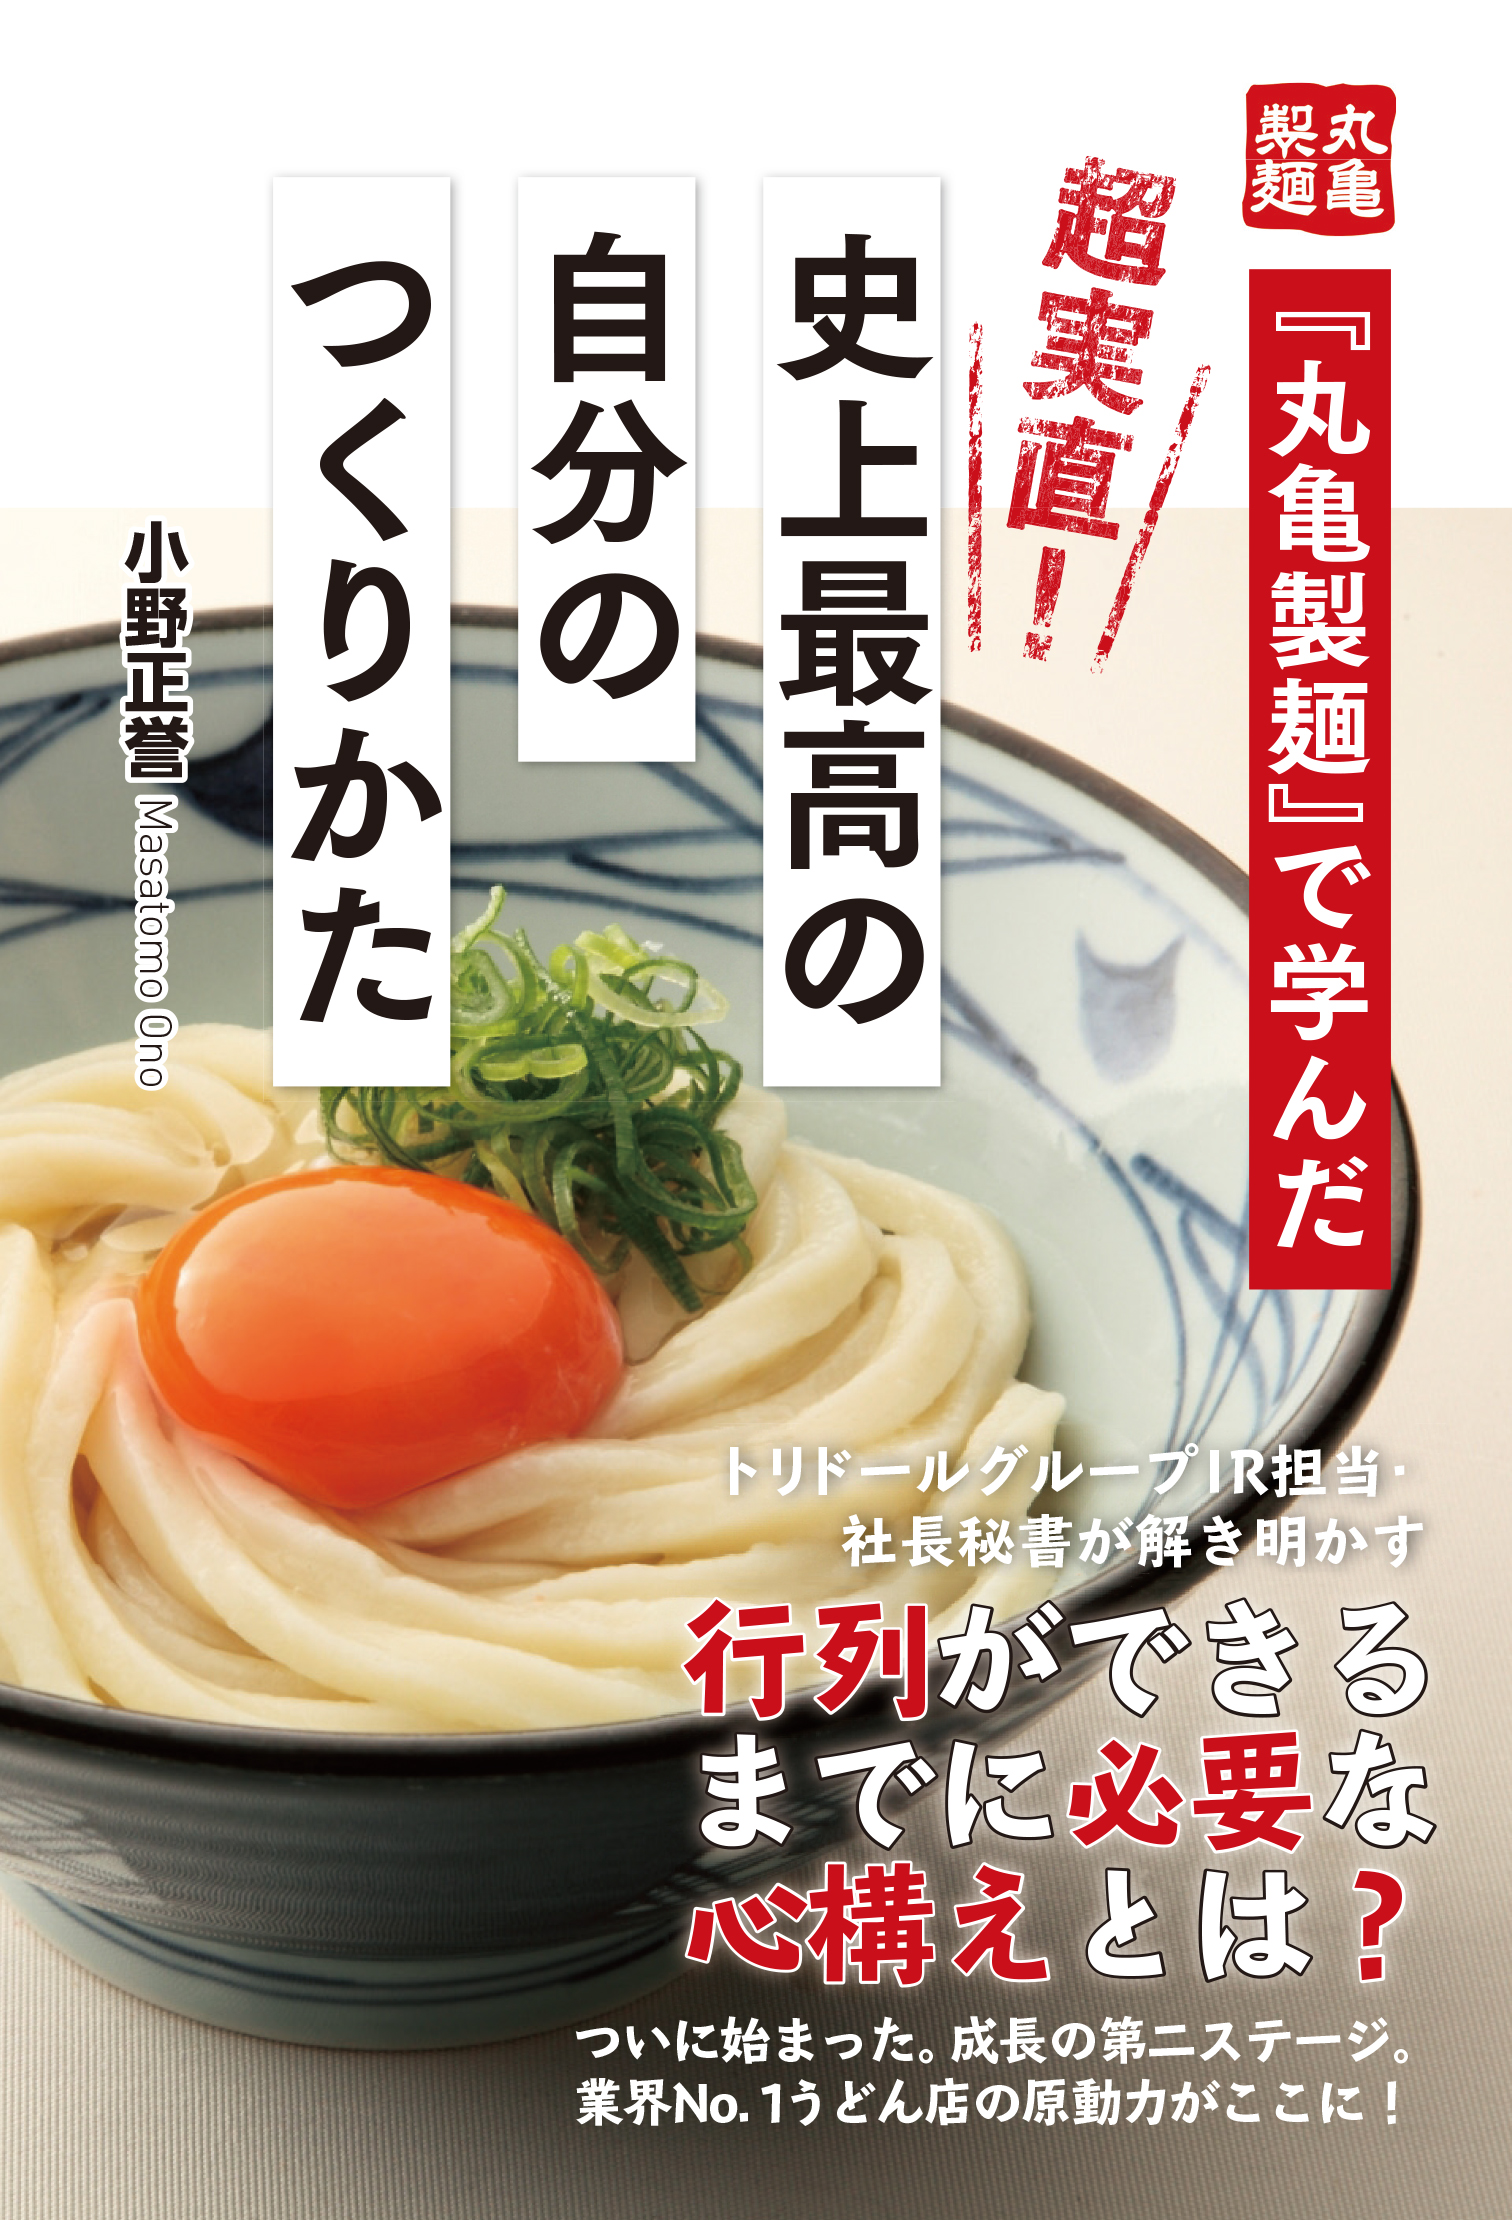 丸亀製麺_cover電子版.indd